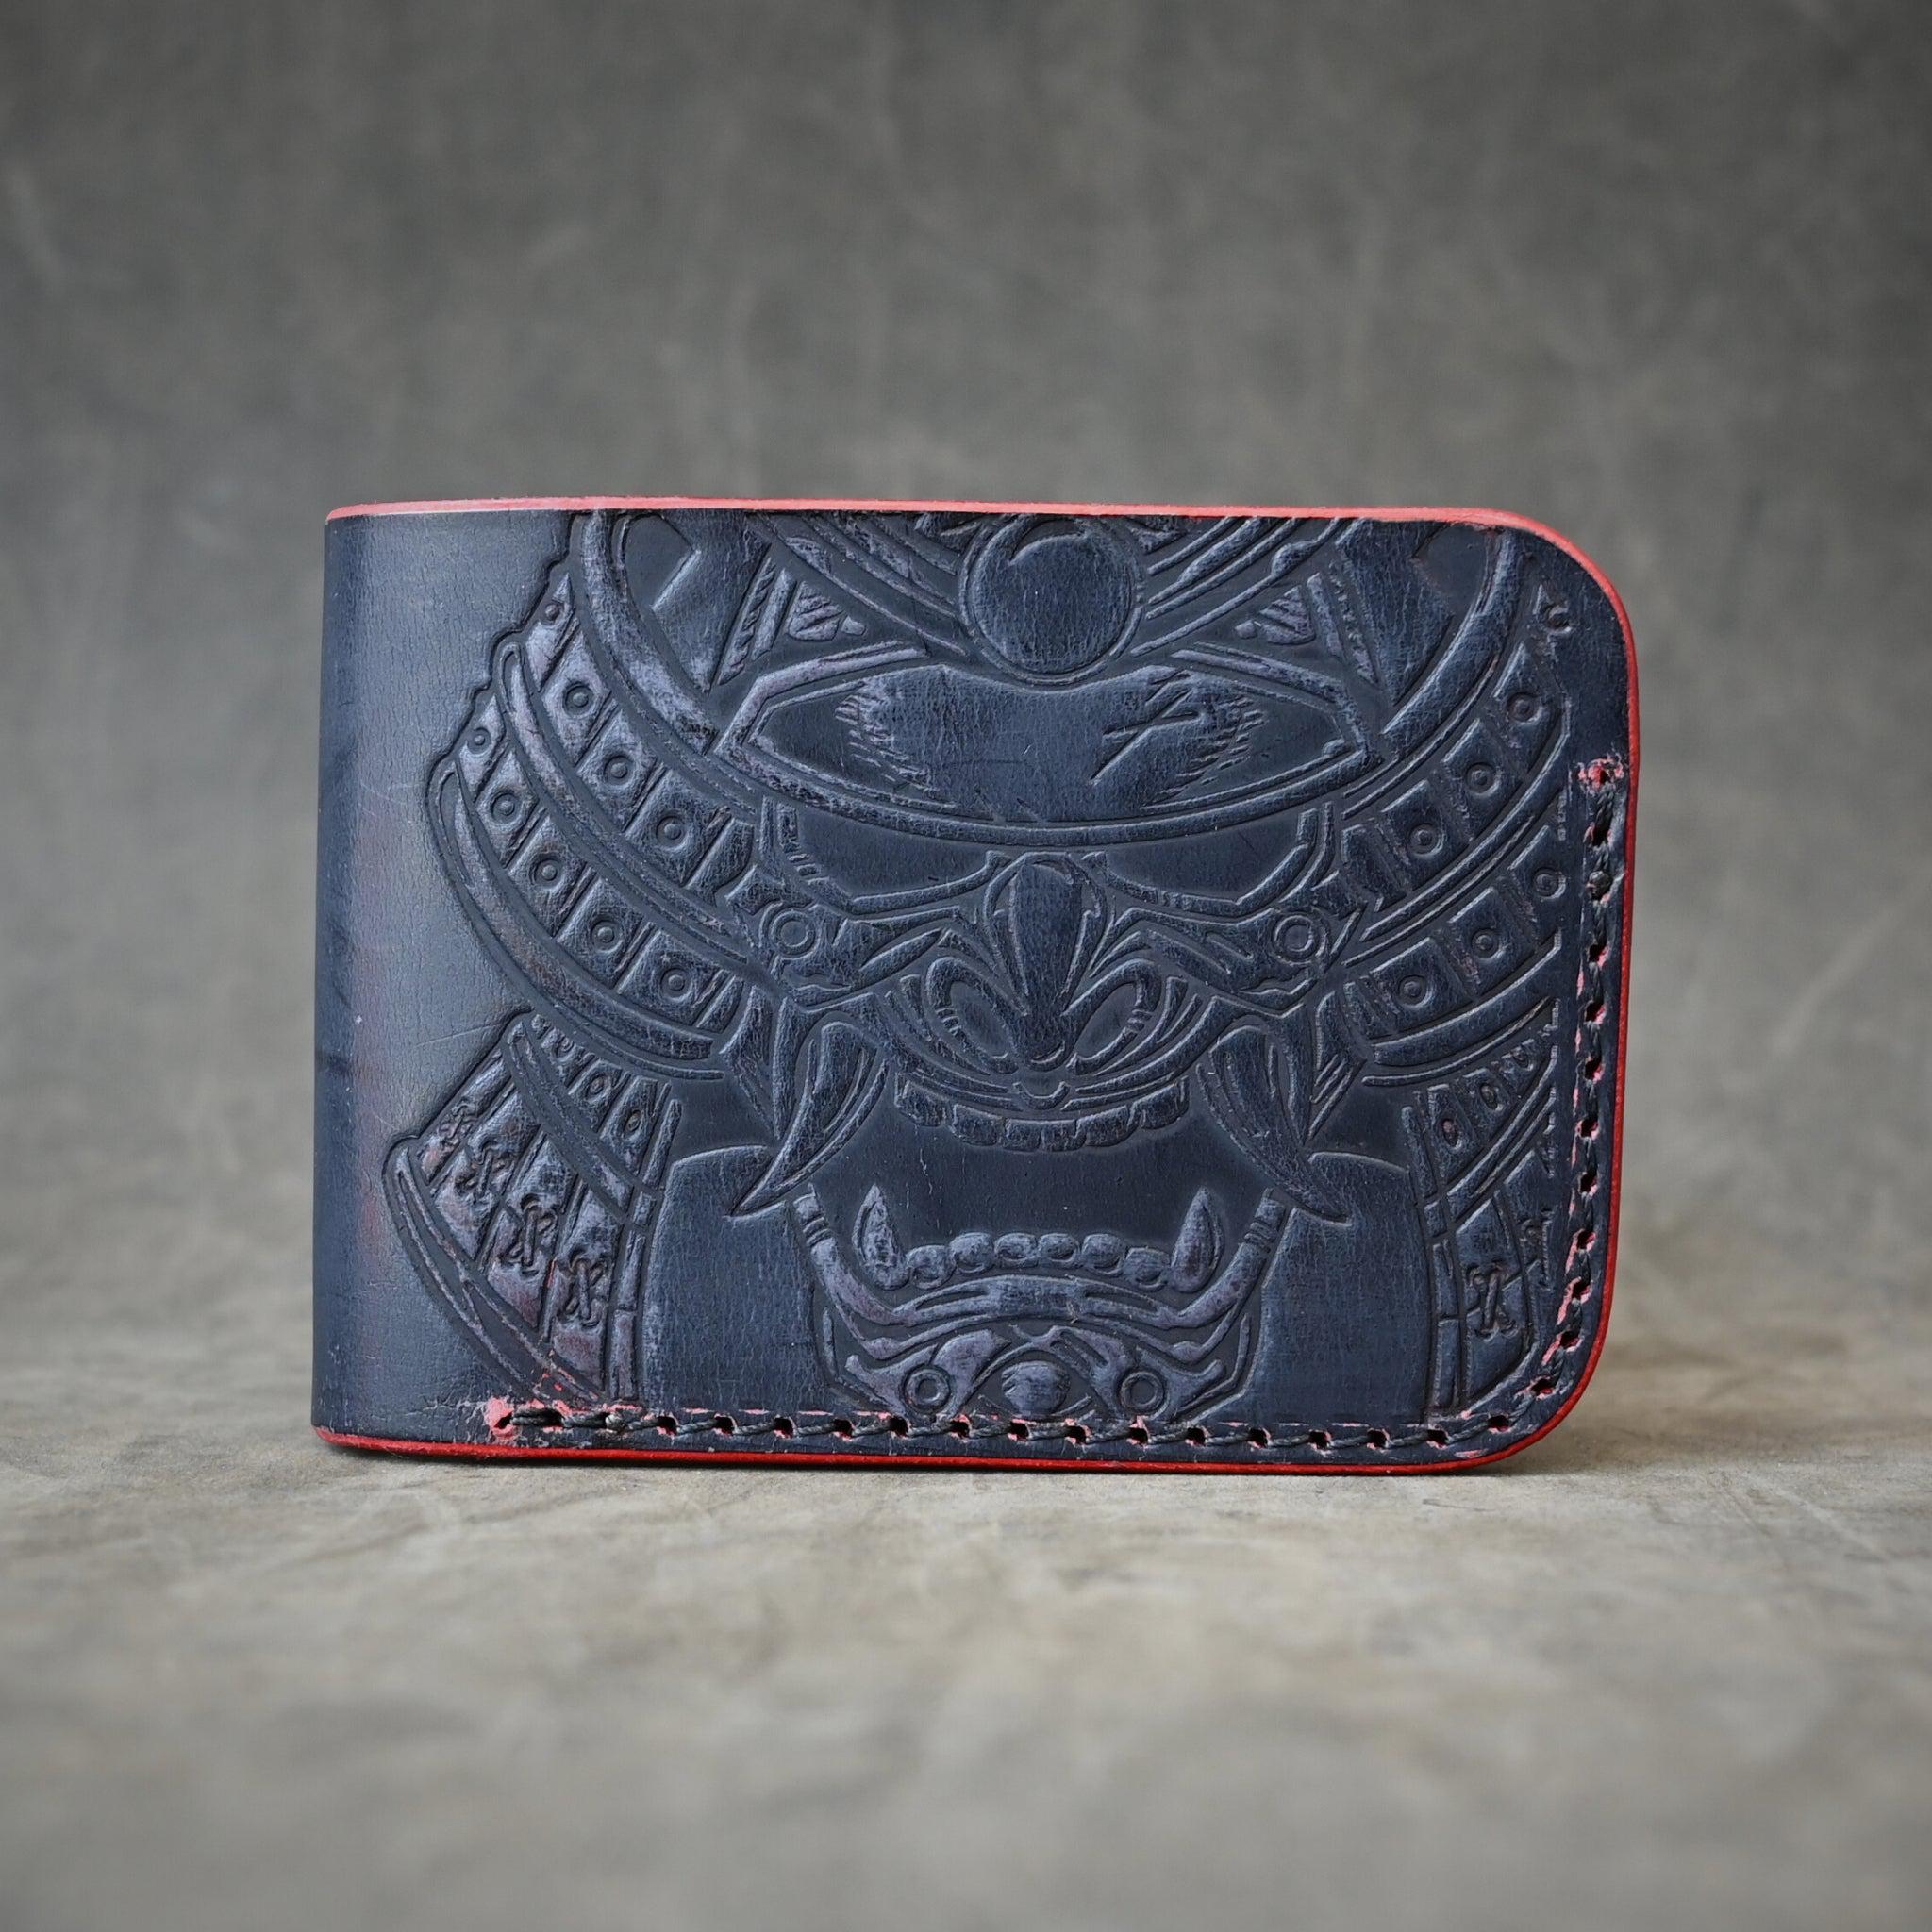 Bifold 2.0 Leather Wallet - Black Cherry Ghost Samurai Mask